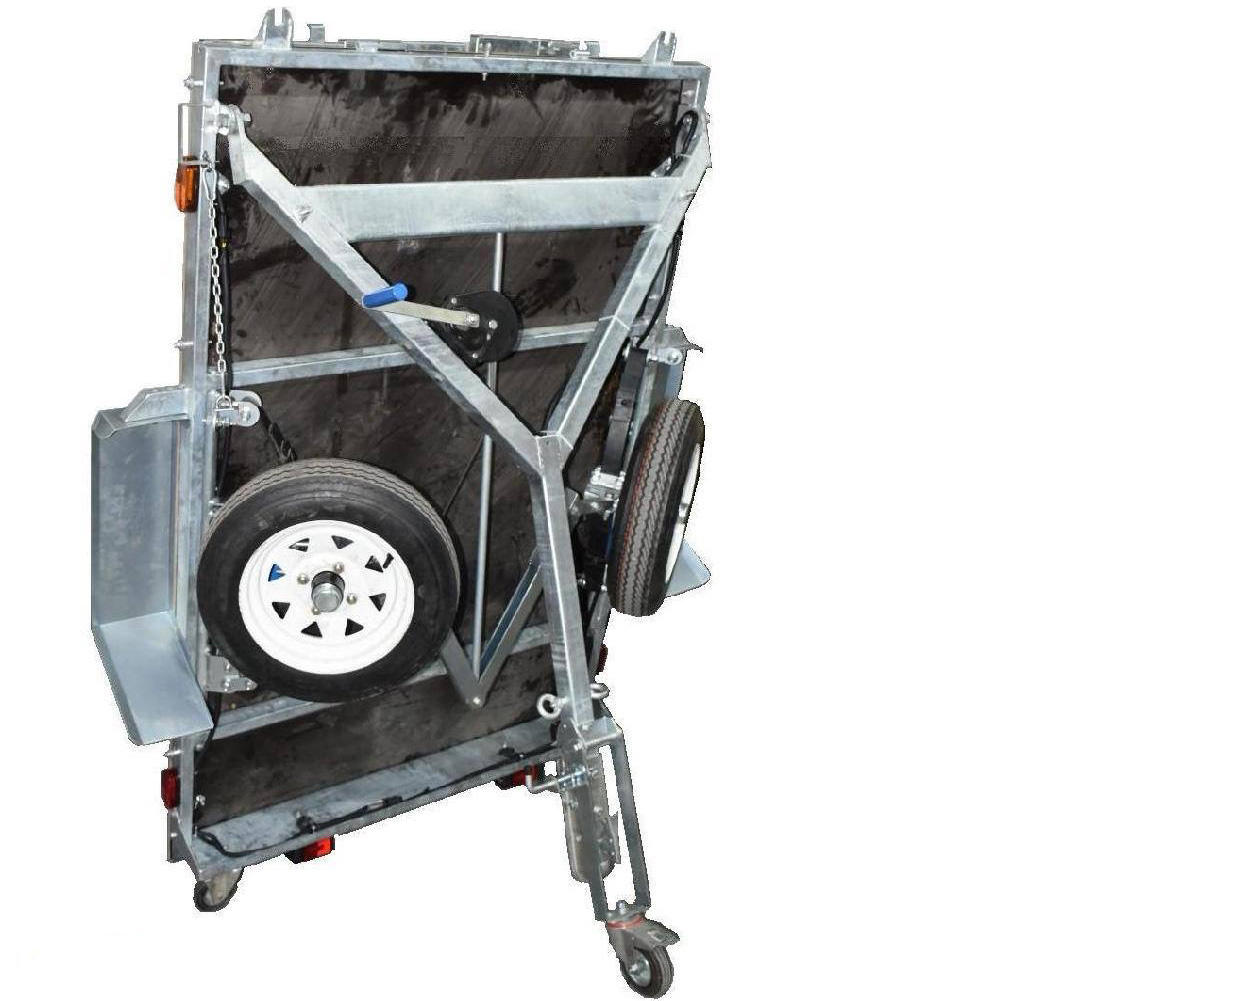 Wholesale Towbal folding utility trailer Snowaves Mechanical Brand